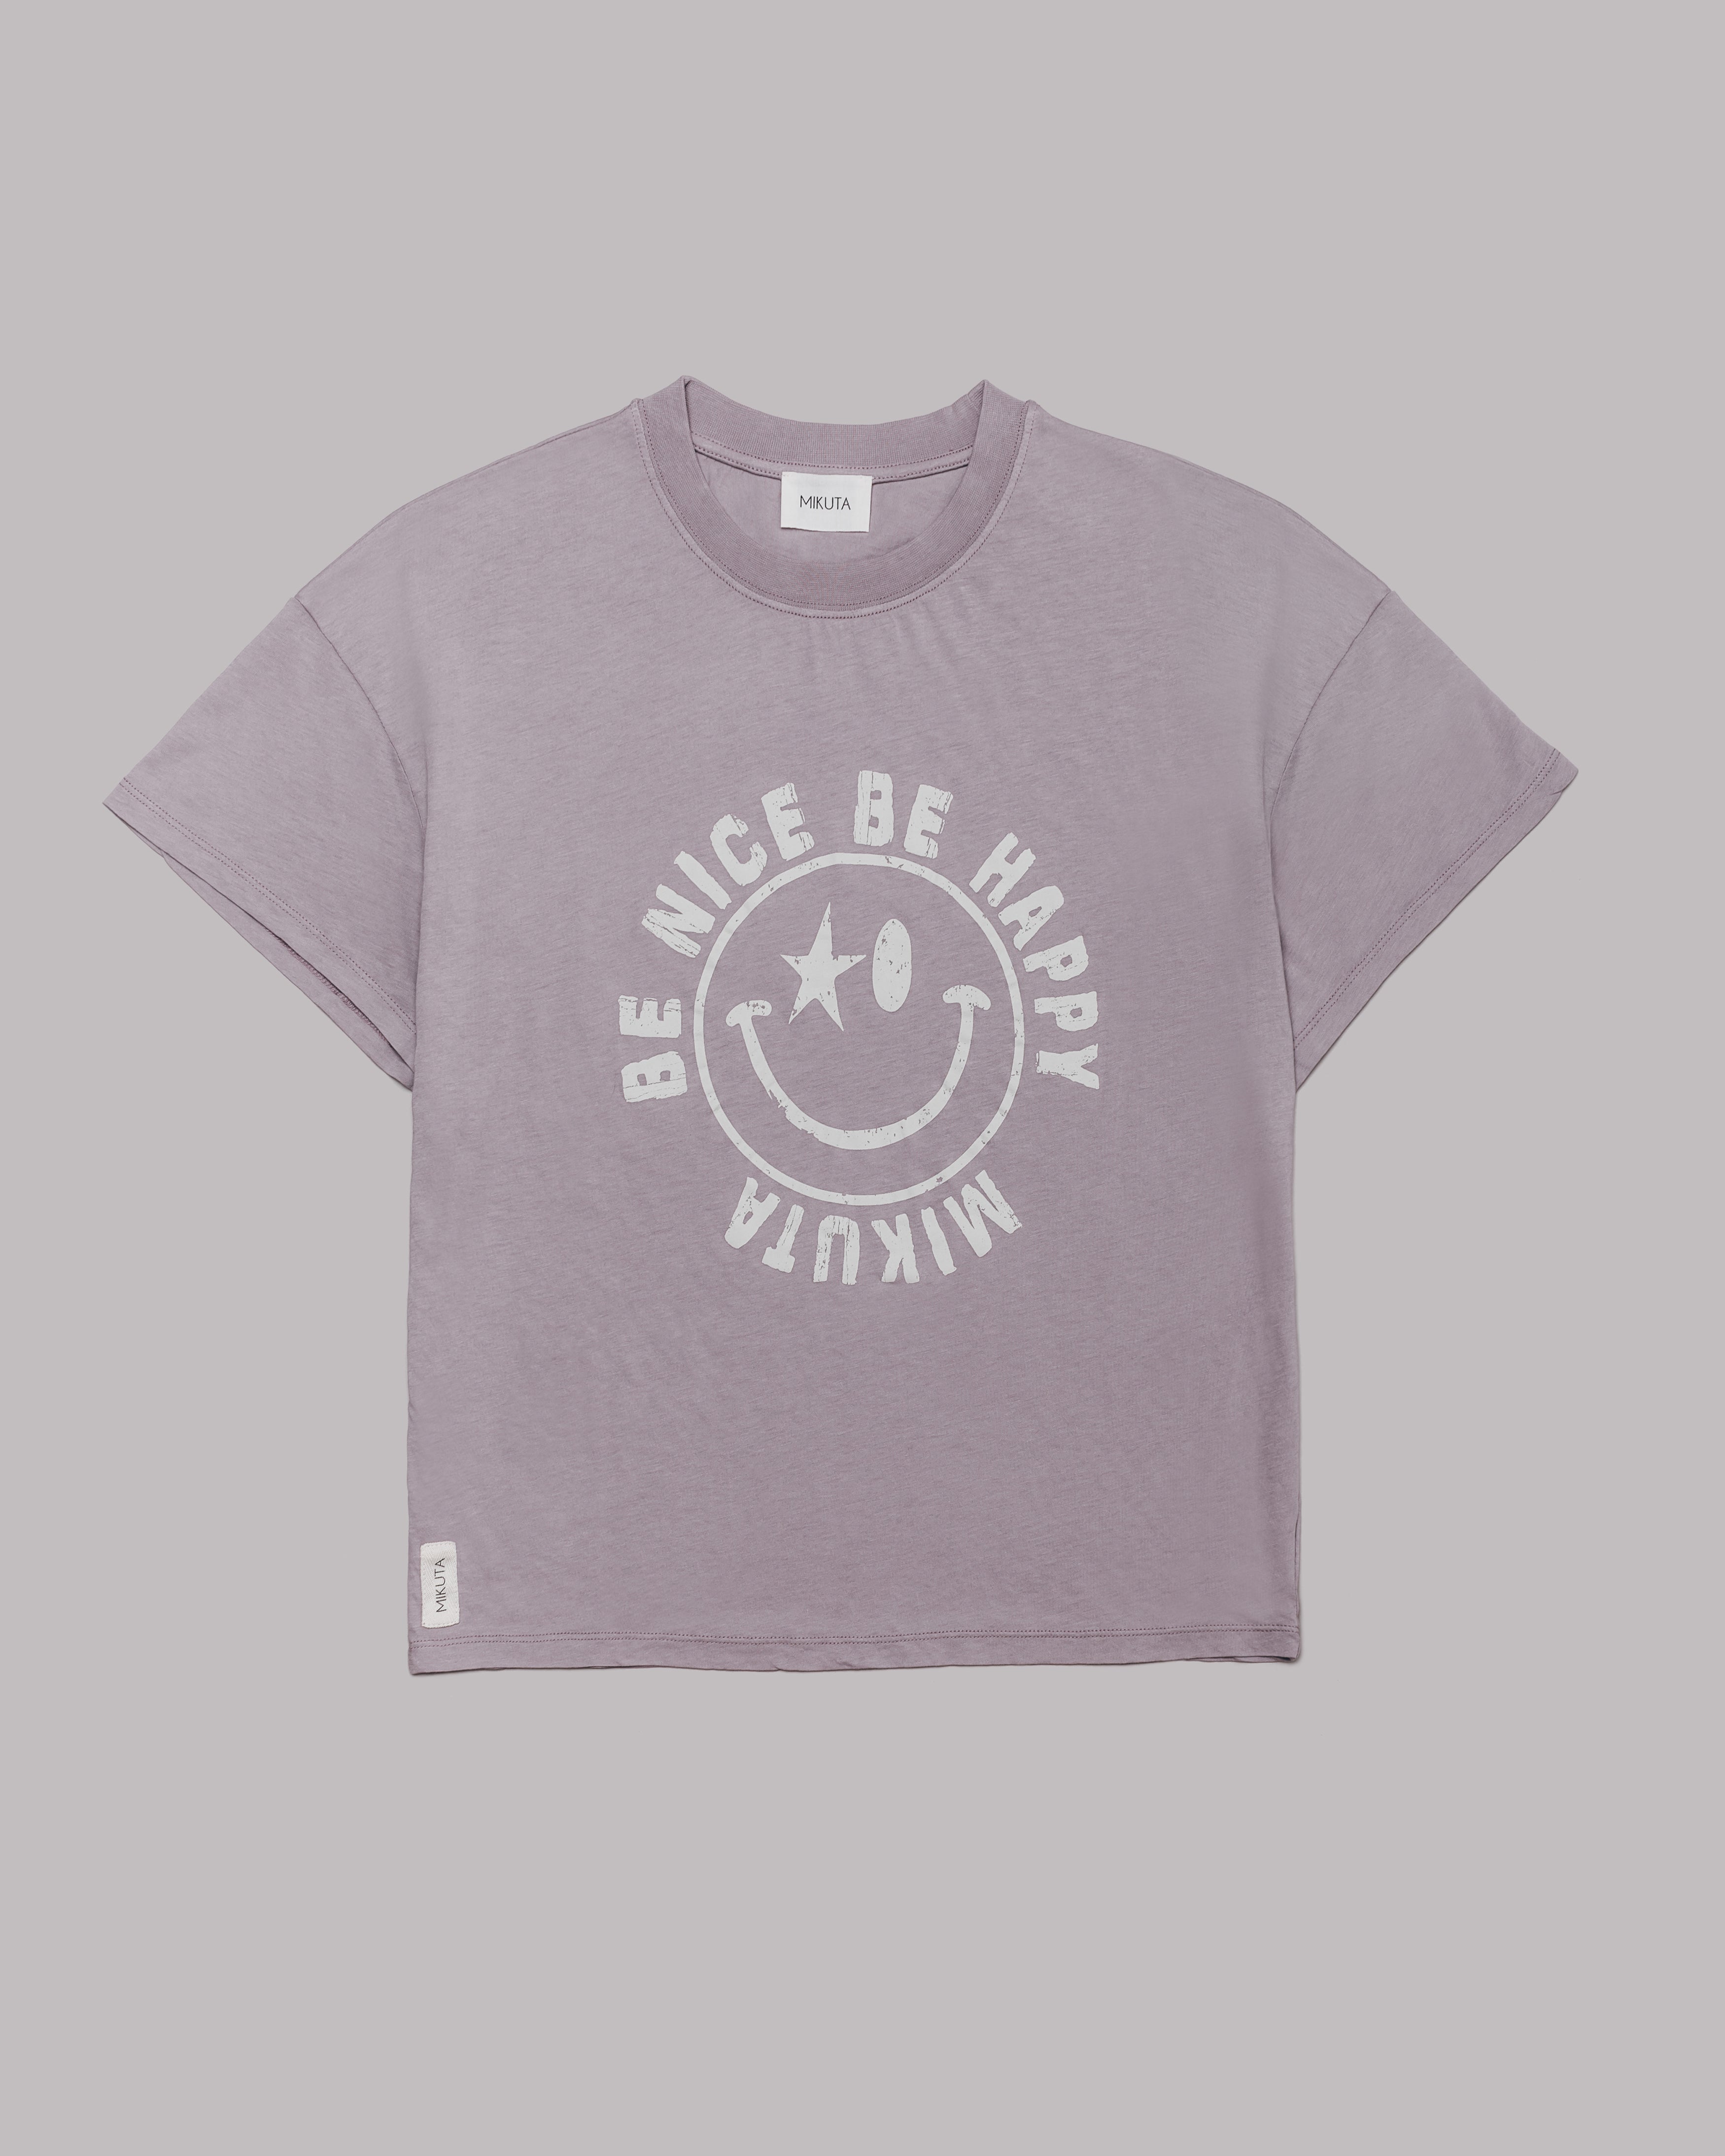 The Purple Smiley Base T-Shirt